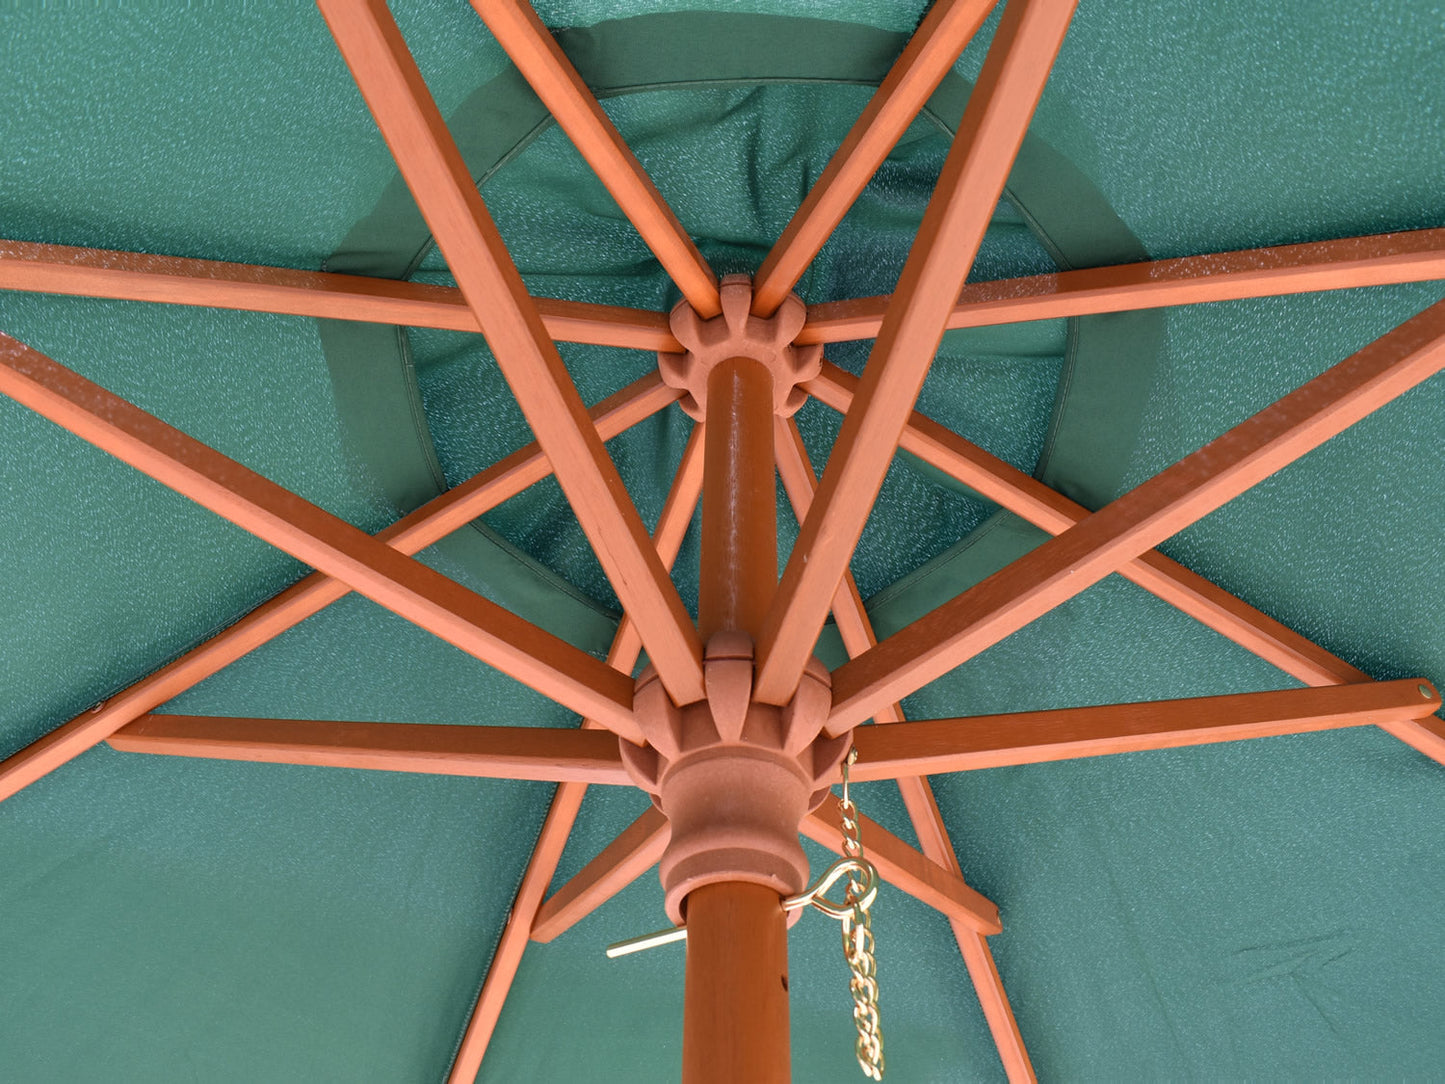 2m Octagonal parasol underside wooden struts